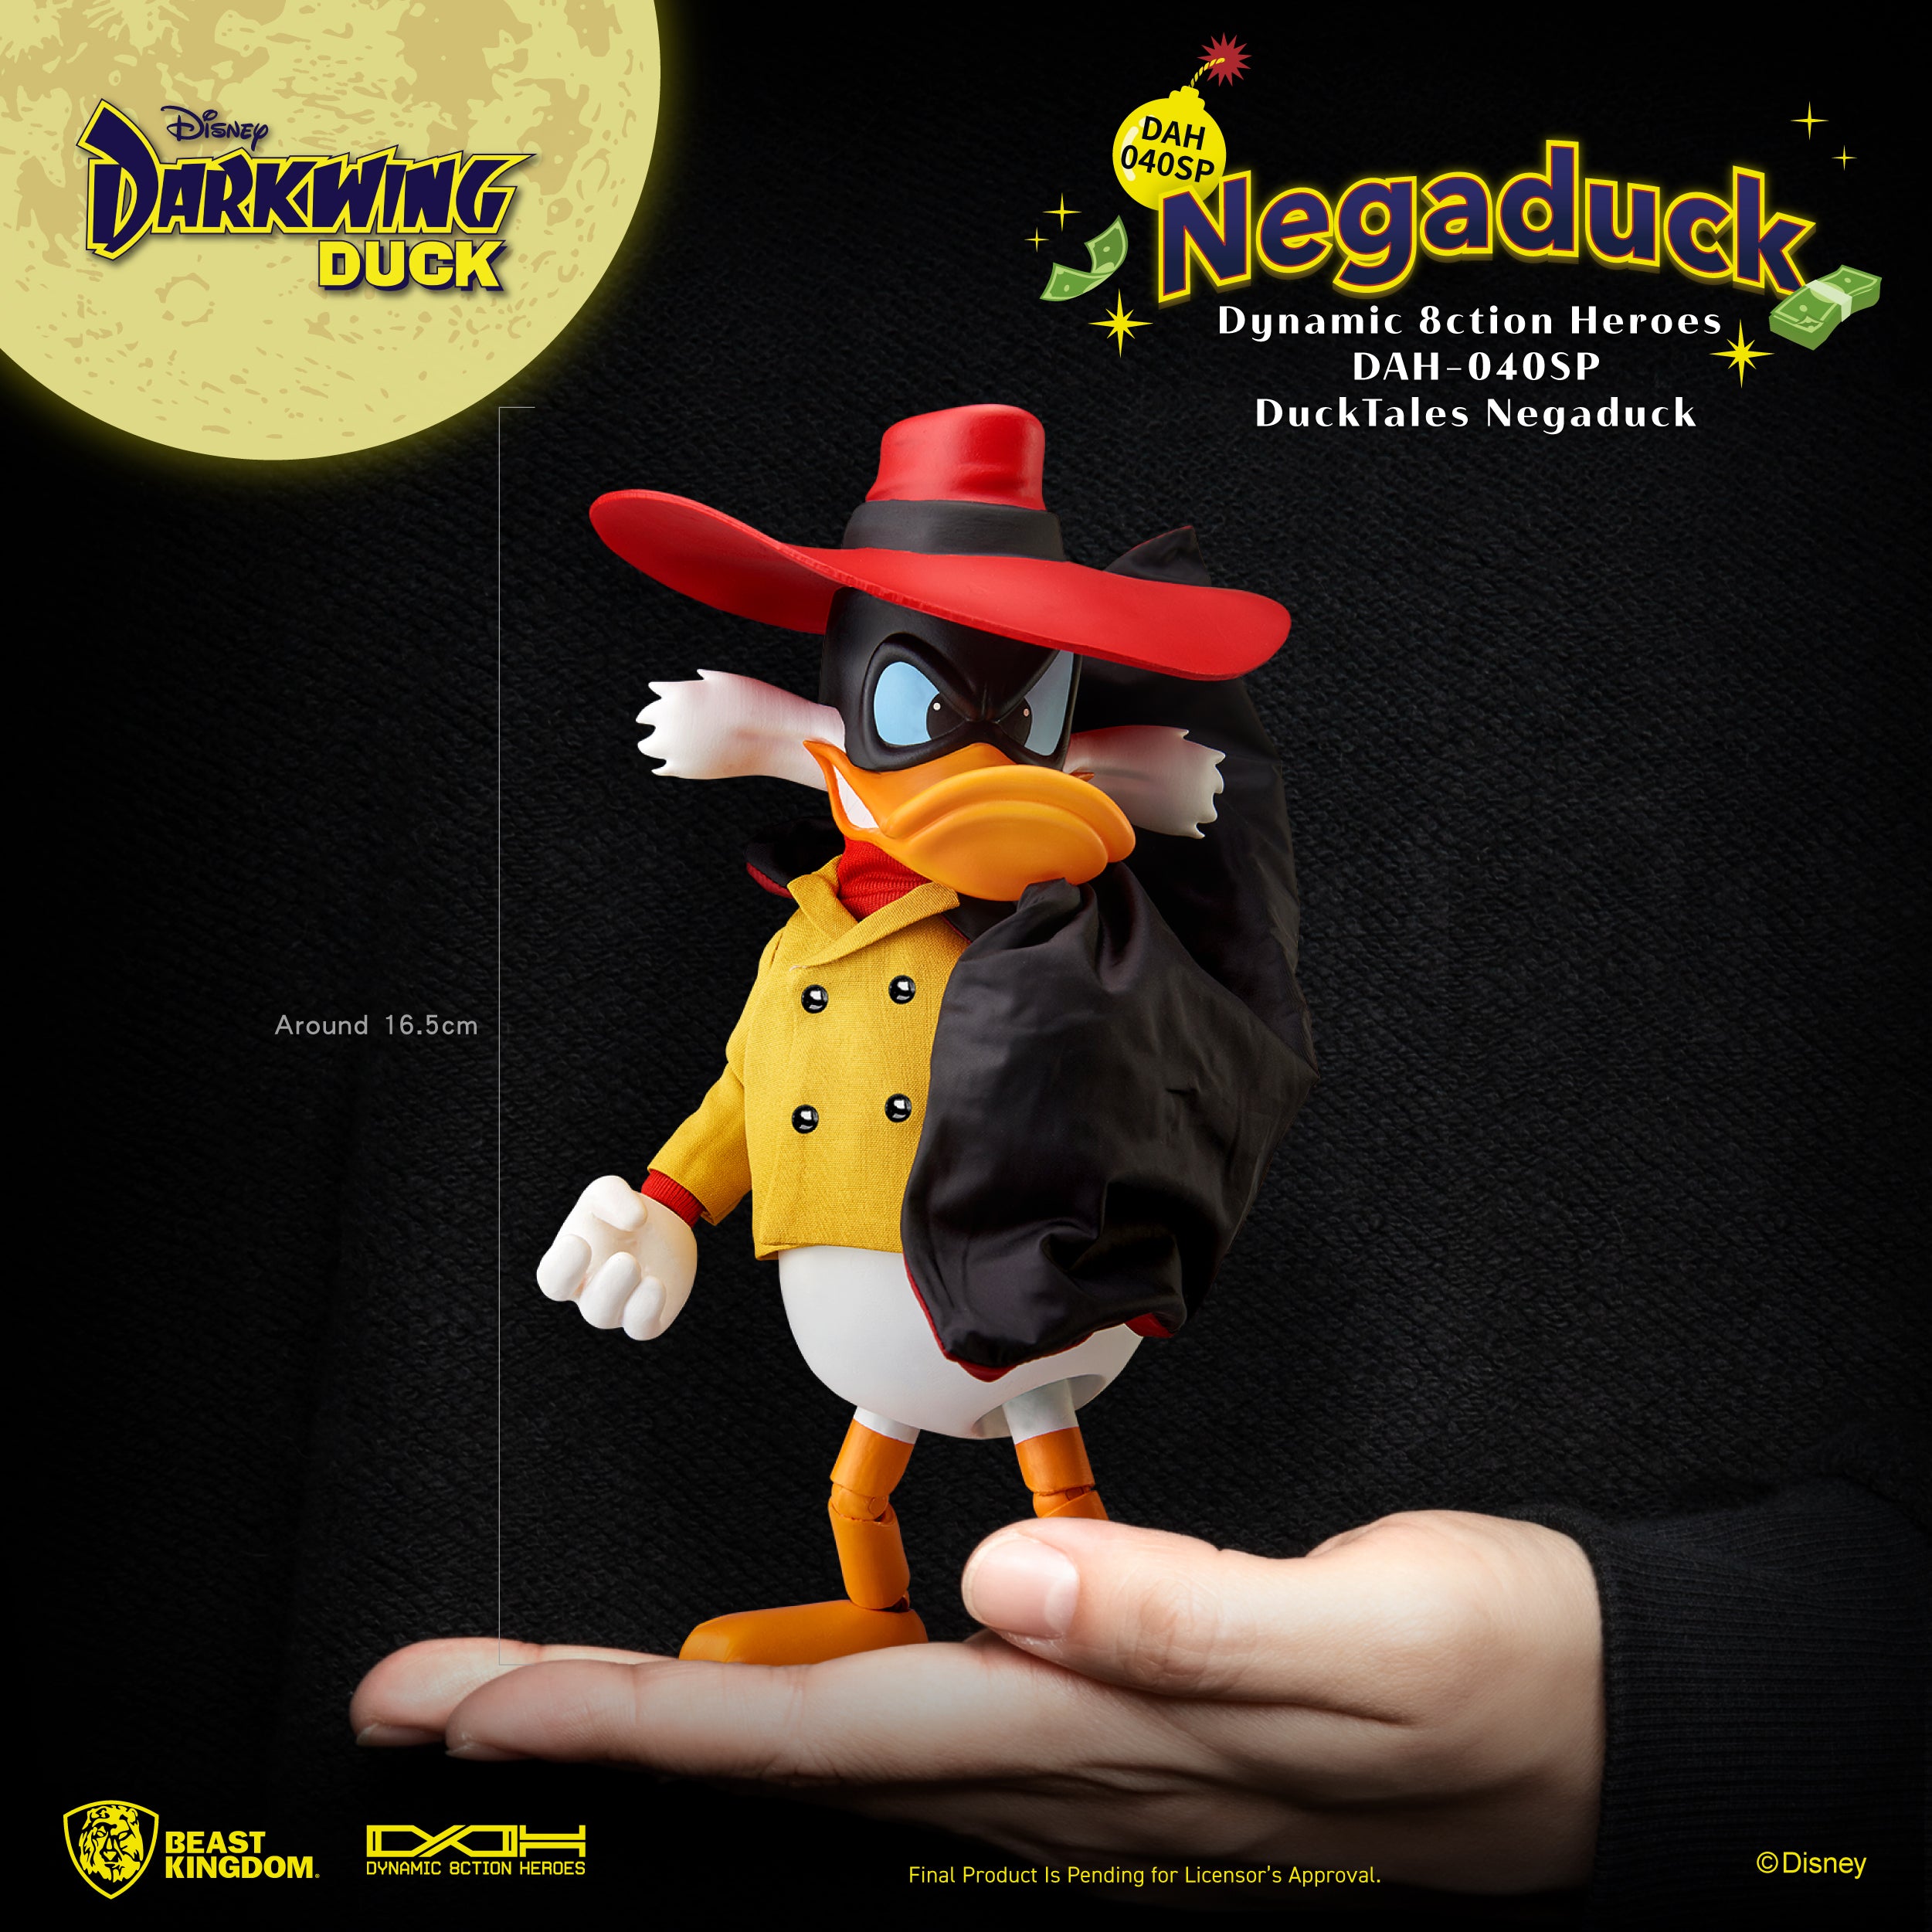 Beast Kingdom DAH-040SP Disney Ducktales Negaduck Dynamic 8ction Heroes Action Figure